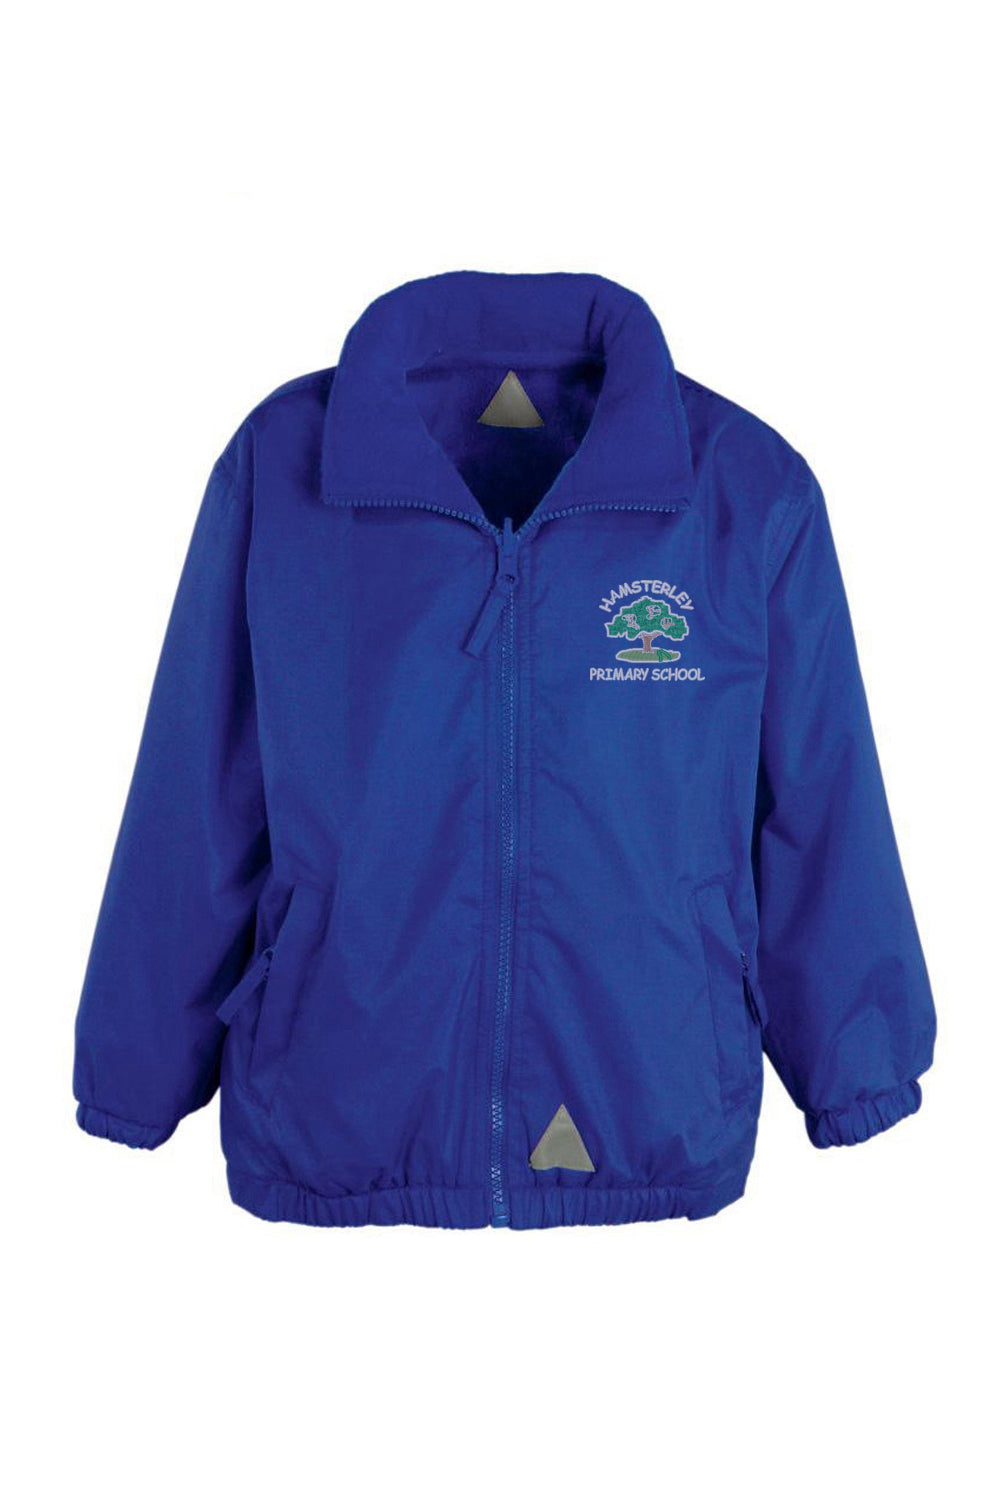 Hamsterley Primary Royal Blue Shower Jacket